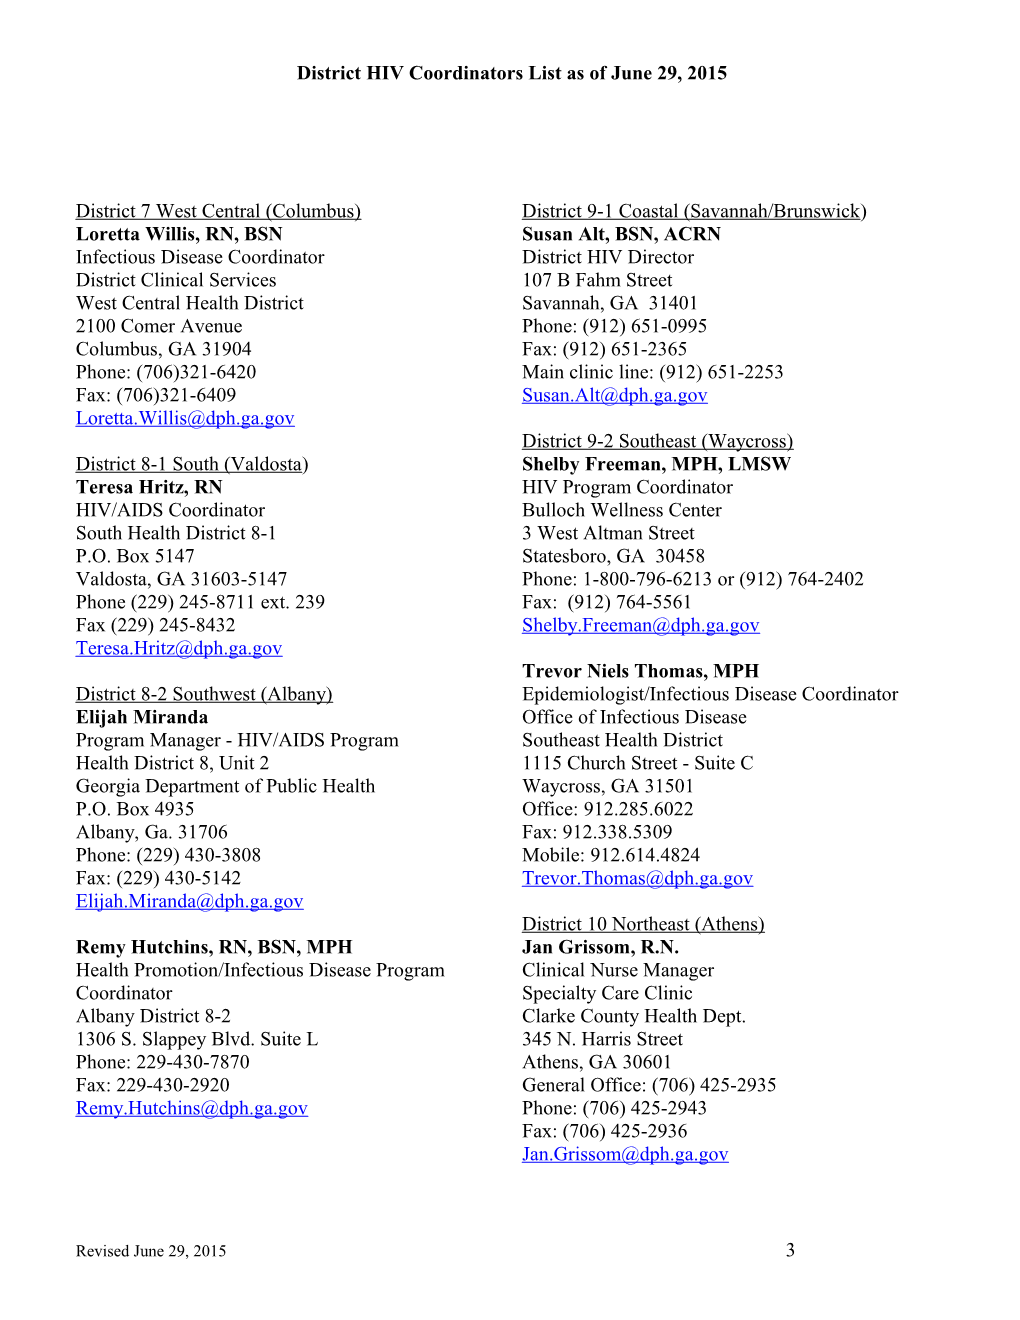 District HIV Coordinators List As of June 29, 2015